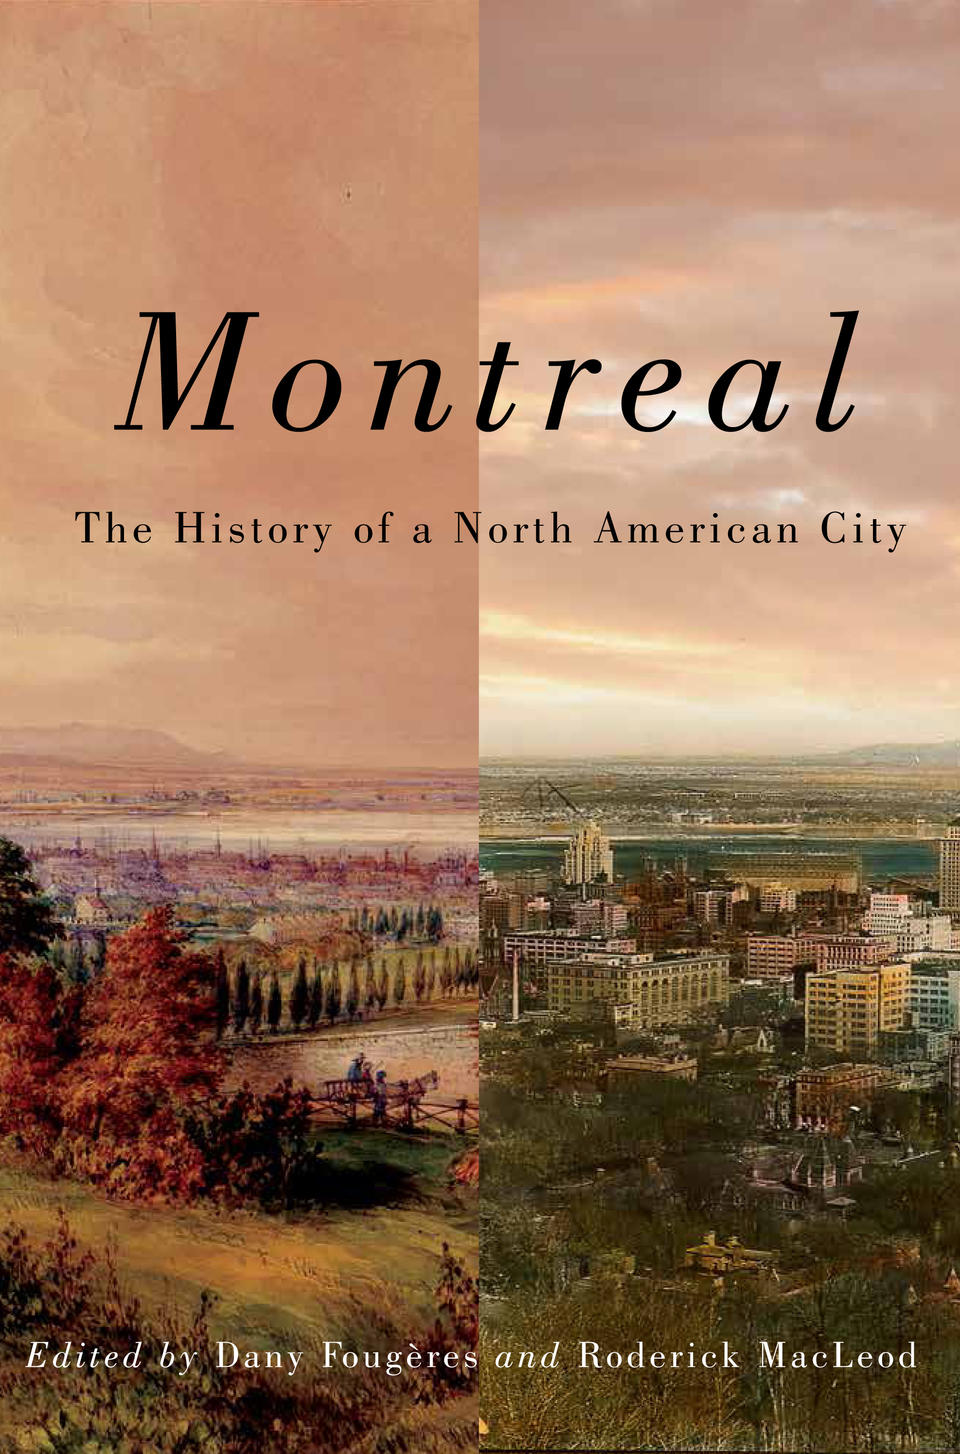 English River Book, The  McGill-Queen's University Press